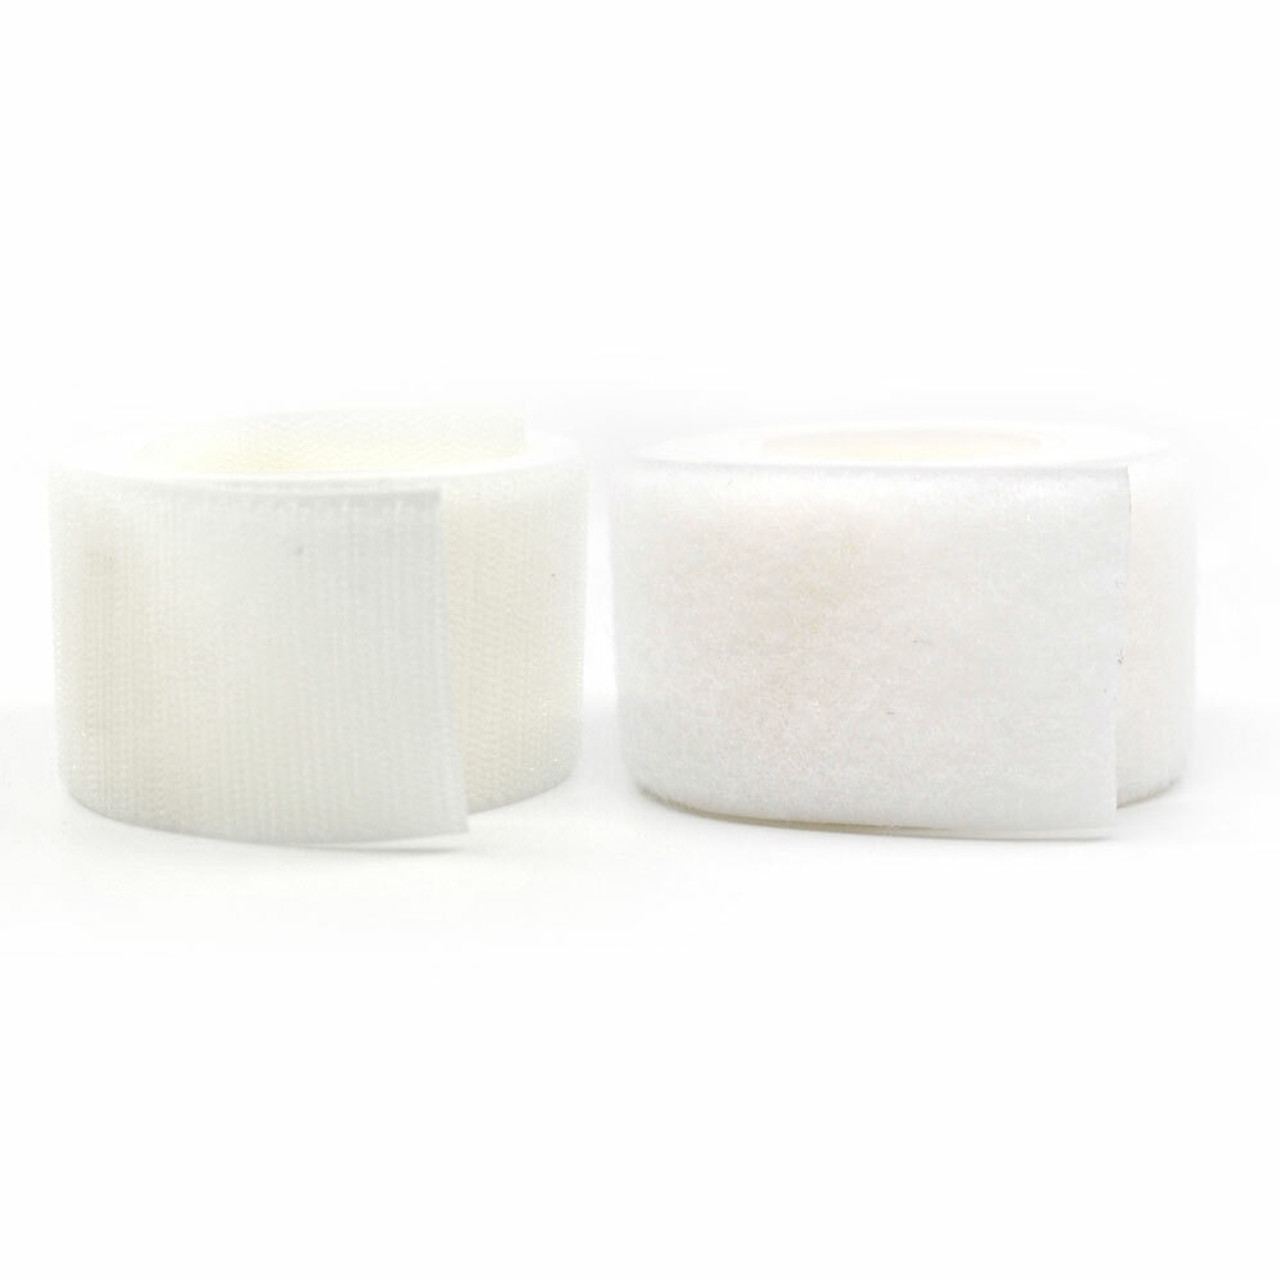 Velcro Brand - 5/8 inch White Loop: Pressure Sensitive Adhesive - Rubber